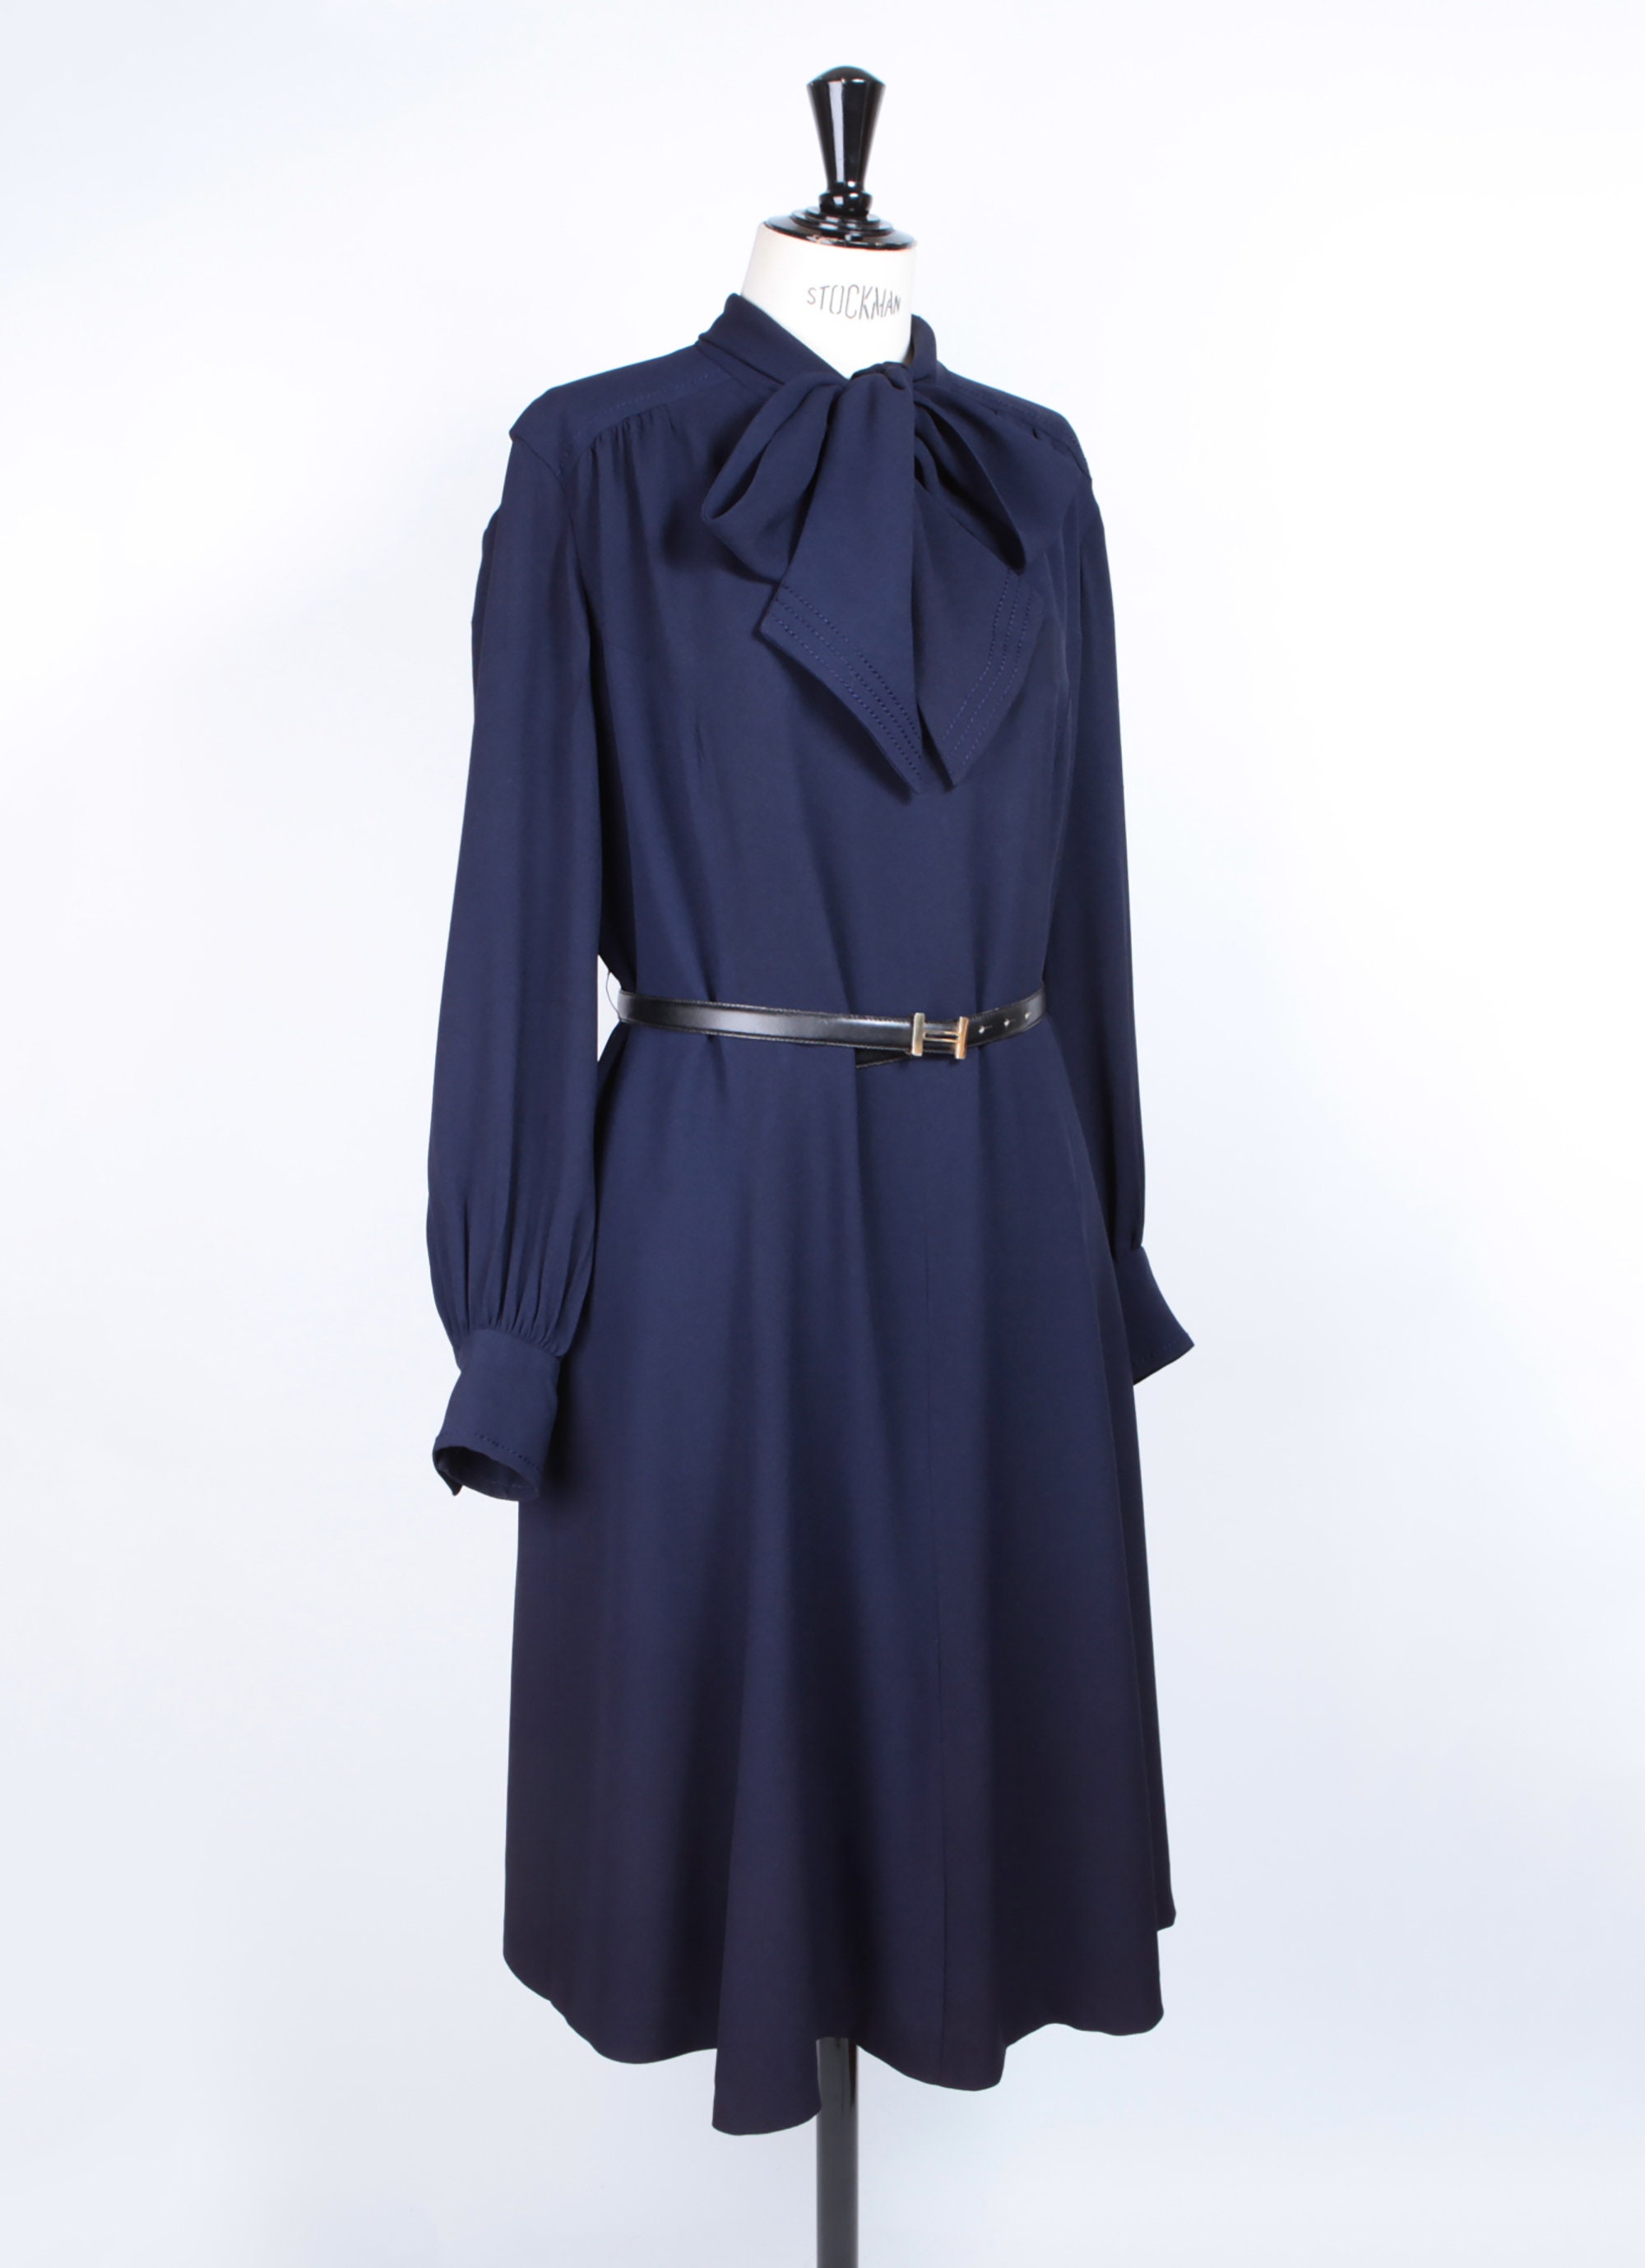 FRANCK & FILS 70's Navy Blue Dress in Wool Crepe. | Etsy